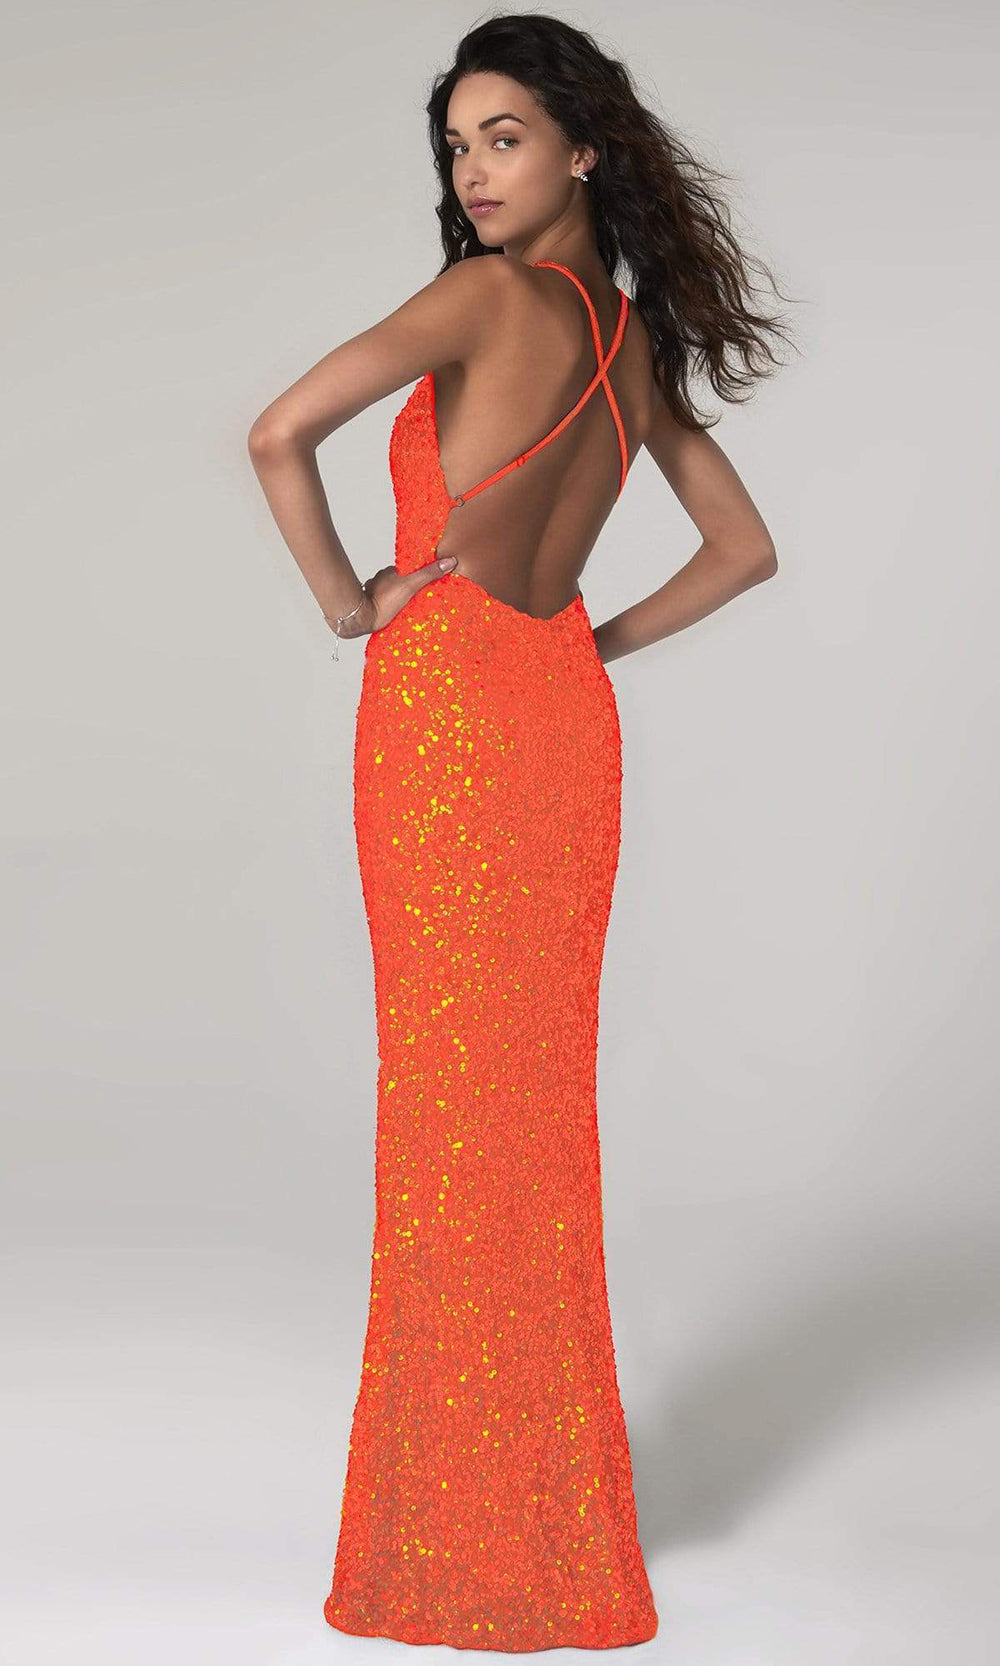 SCALA - Neon Sequined Column Dress 60141 - 1 pc Neon Orange In Size 10 Available CCSALE 10 / Neon Orange